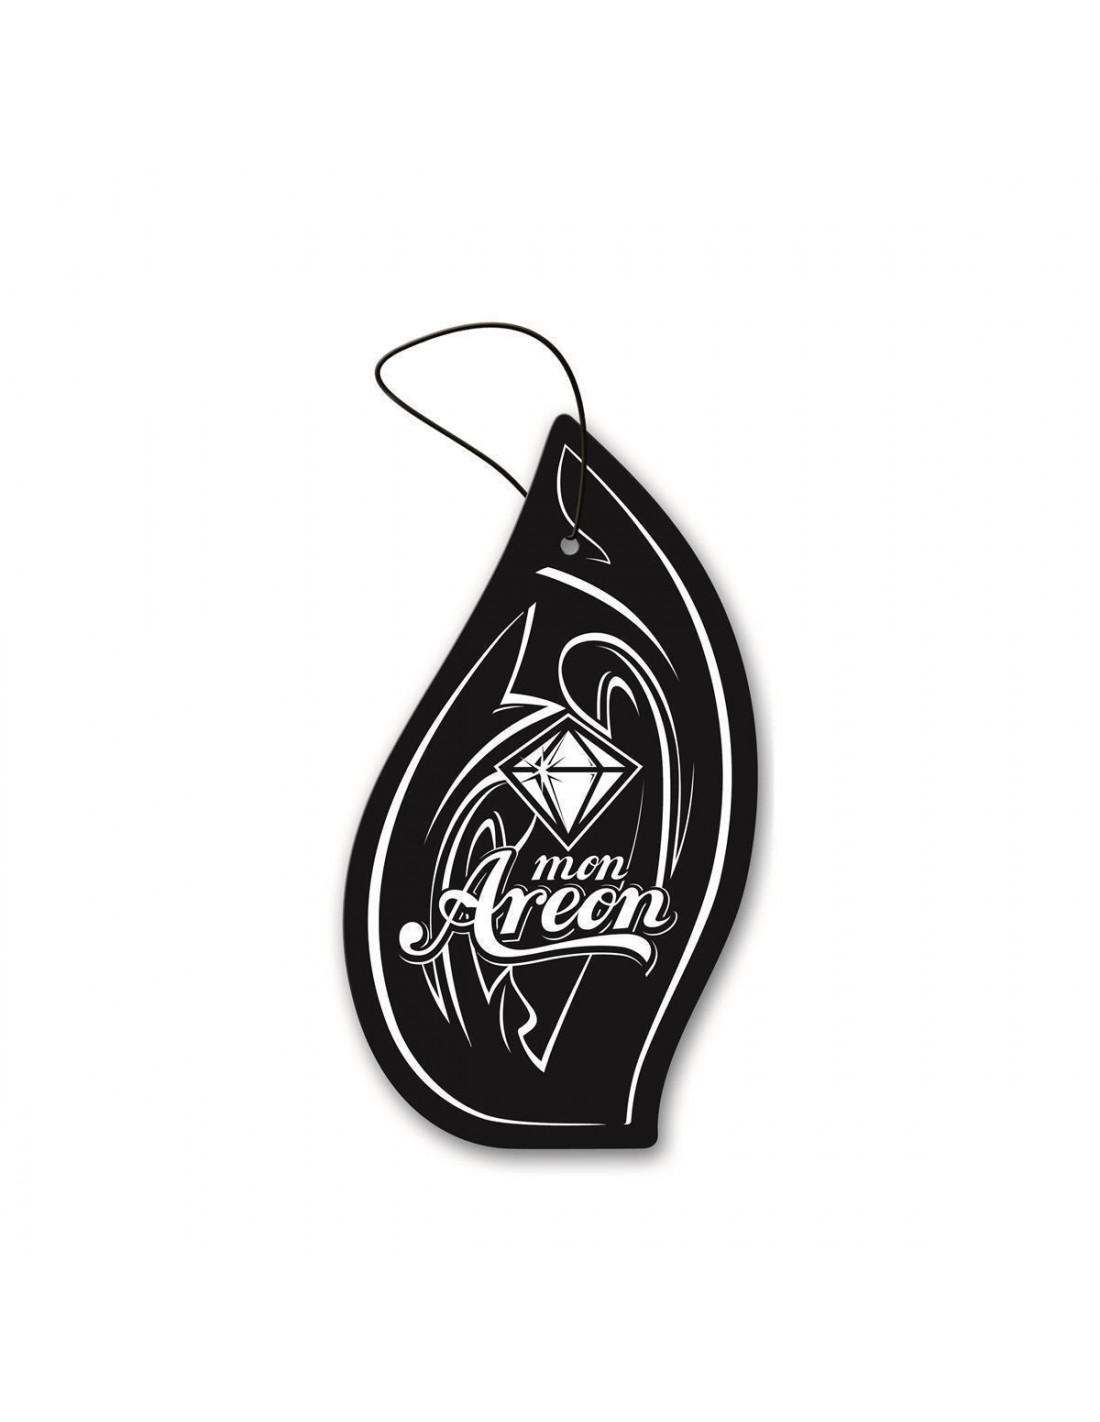 Original Areon Auto Parfüm Lufterfrischer Duftbaum Lüftungsgitter Black  Crystal